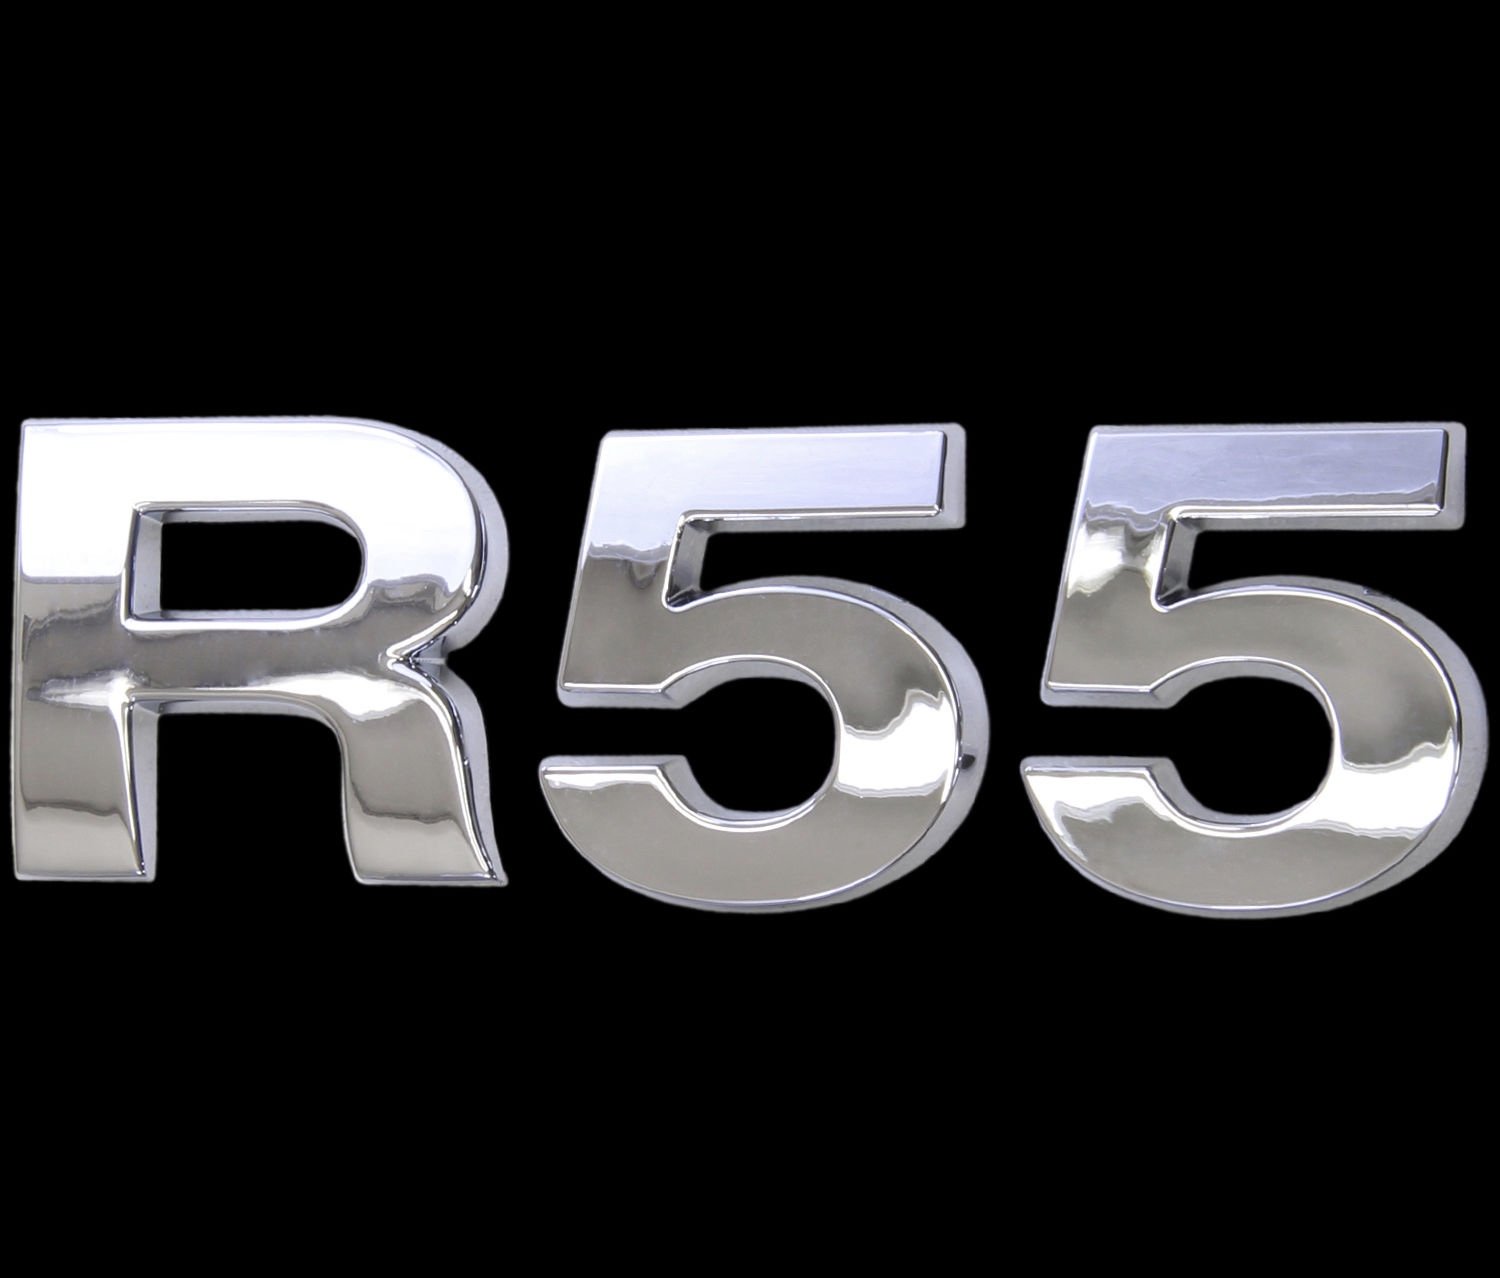 3D Chrom Emblem Aufkleber Logo R55 Tuning Cooper Motor Renn Sport Mini von Recambo